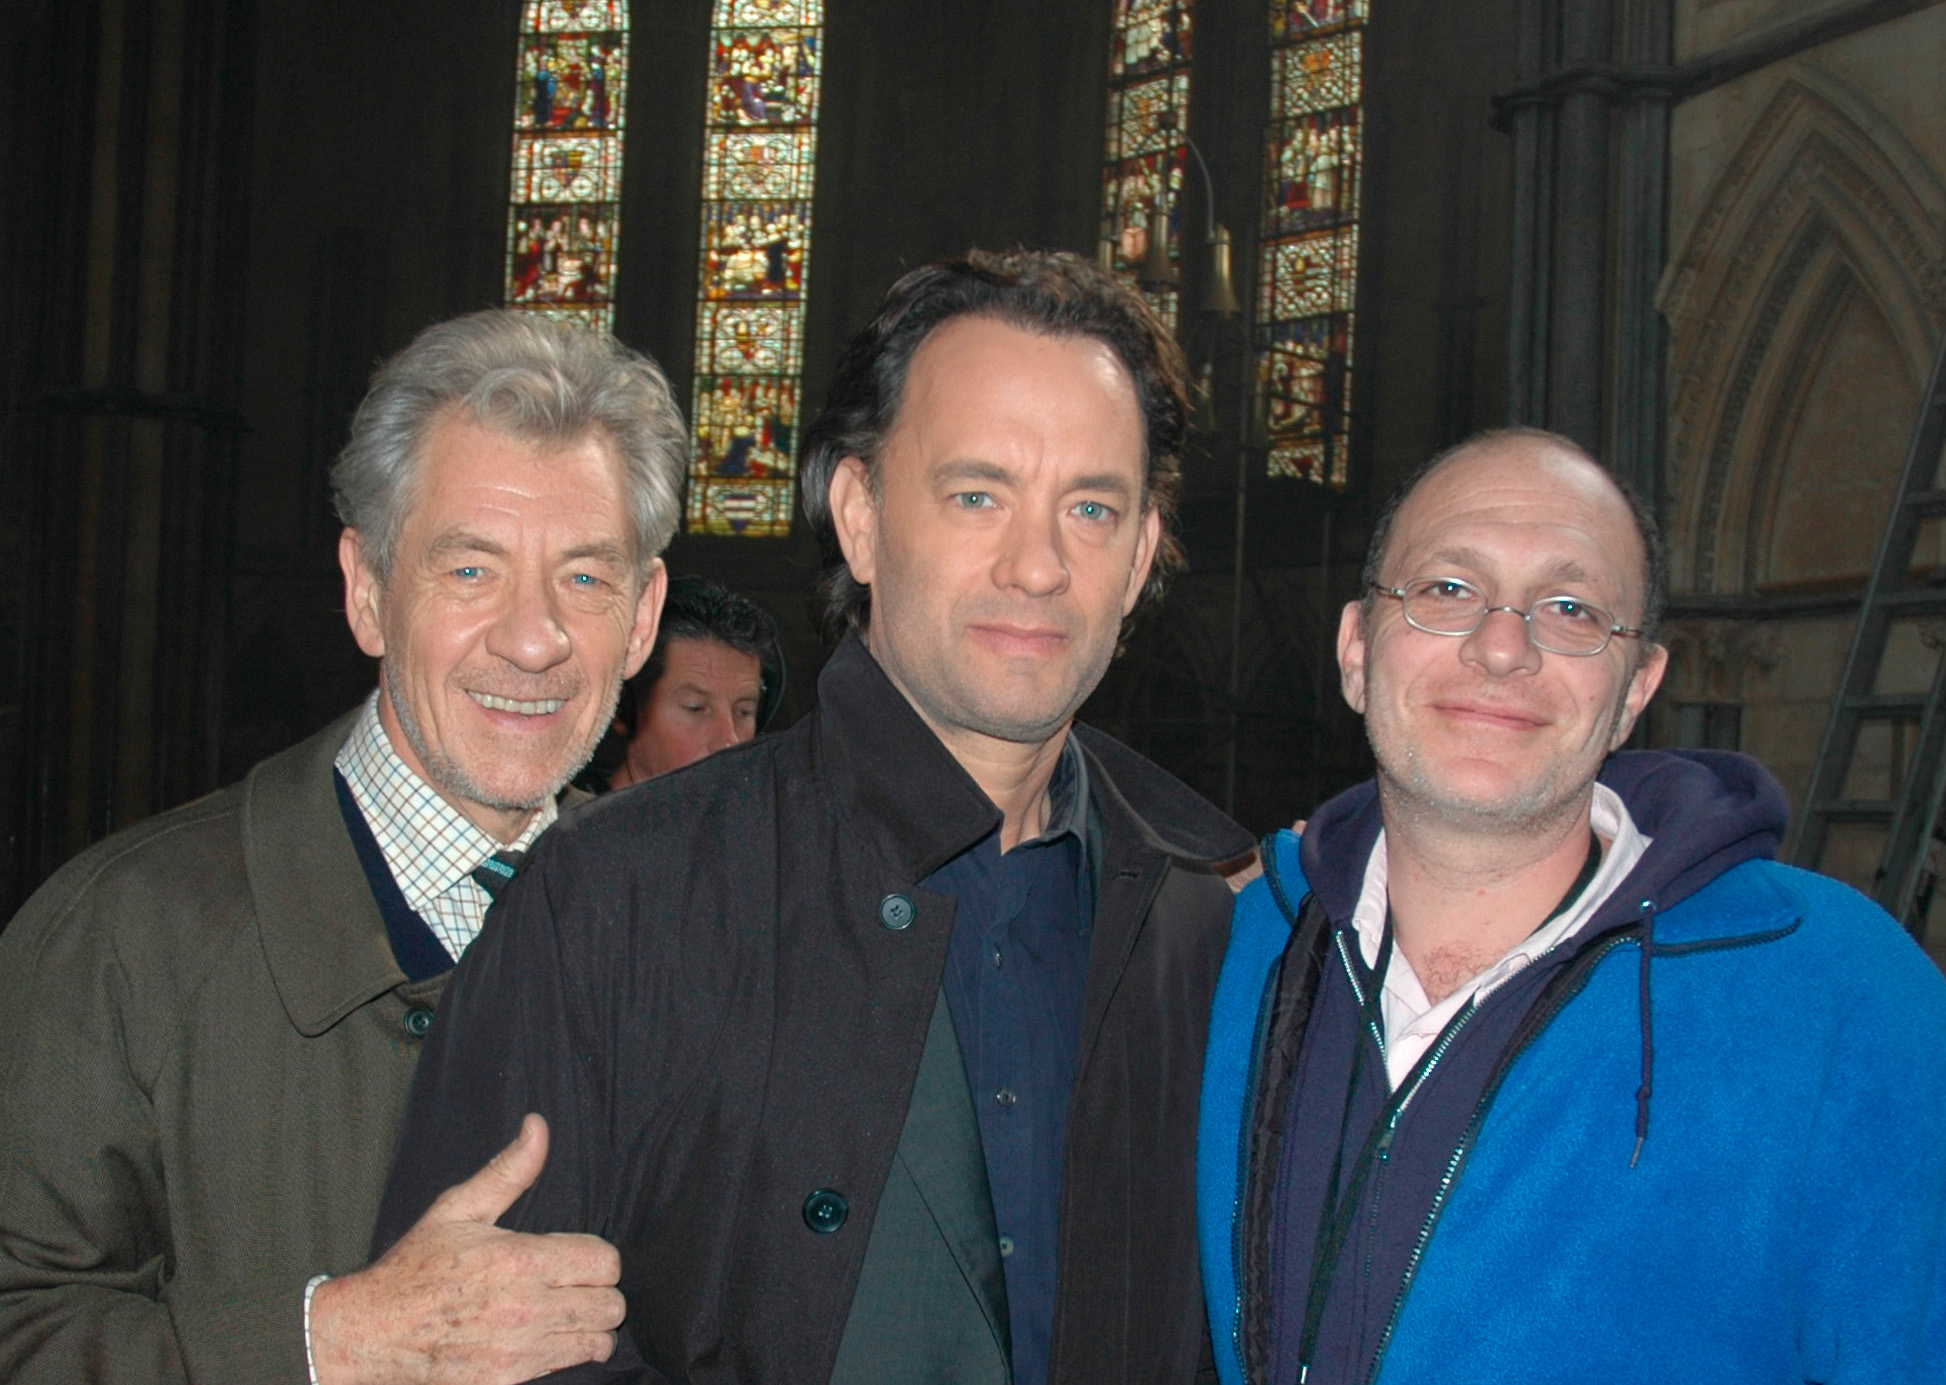 2005: Lincoln, UK. Ian McKellen,Tom Hanks and Akiva Goldsman on the set of “The Da Vinci Code”